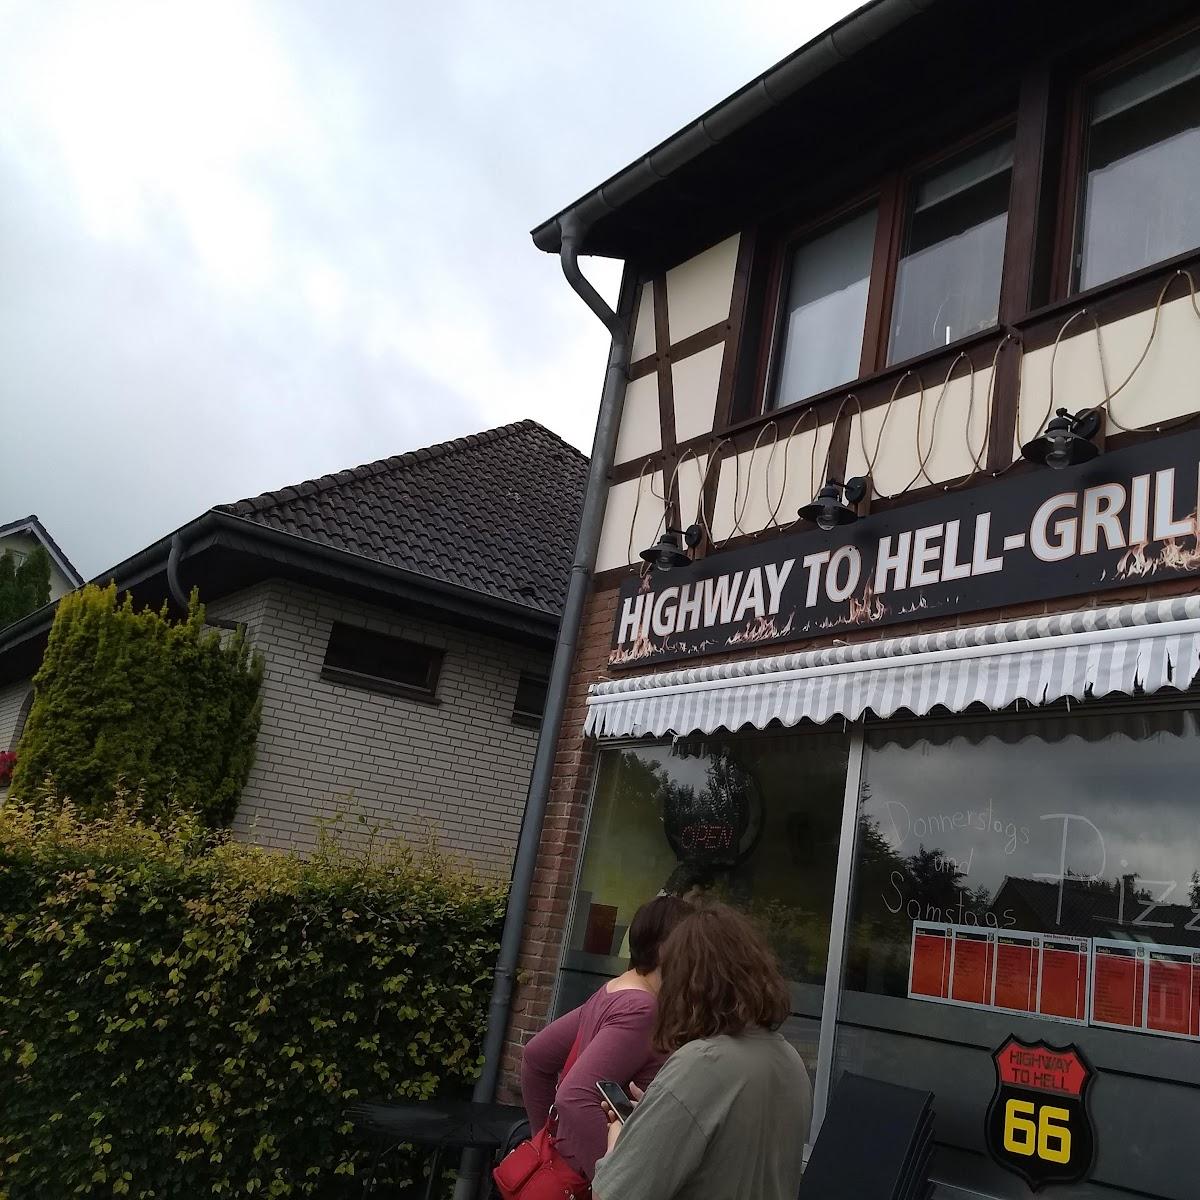 Restaurant "Highway To Hell" in Monschau